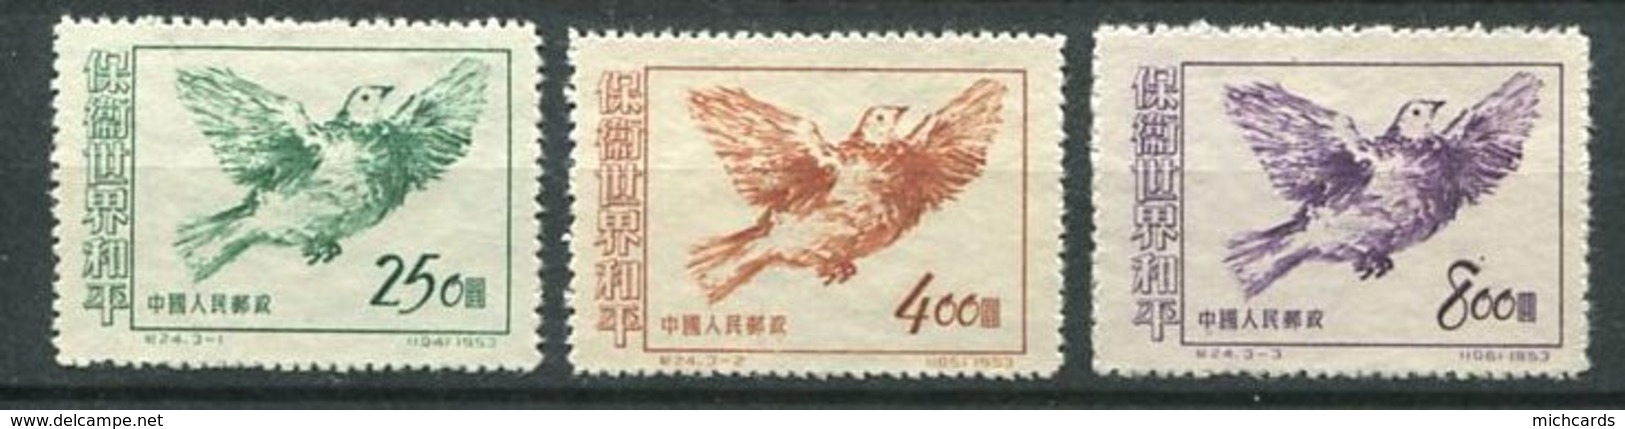 194 CHINE 1953 - Yvert 987 A/C - Oiseau -  Neuf ** (MNH) Sans Trace De Charniere - Nuovi